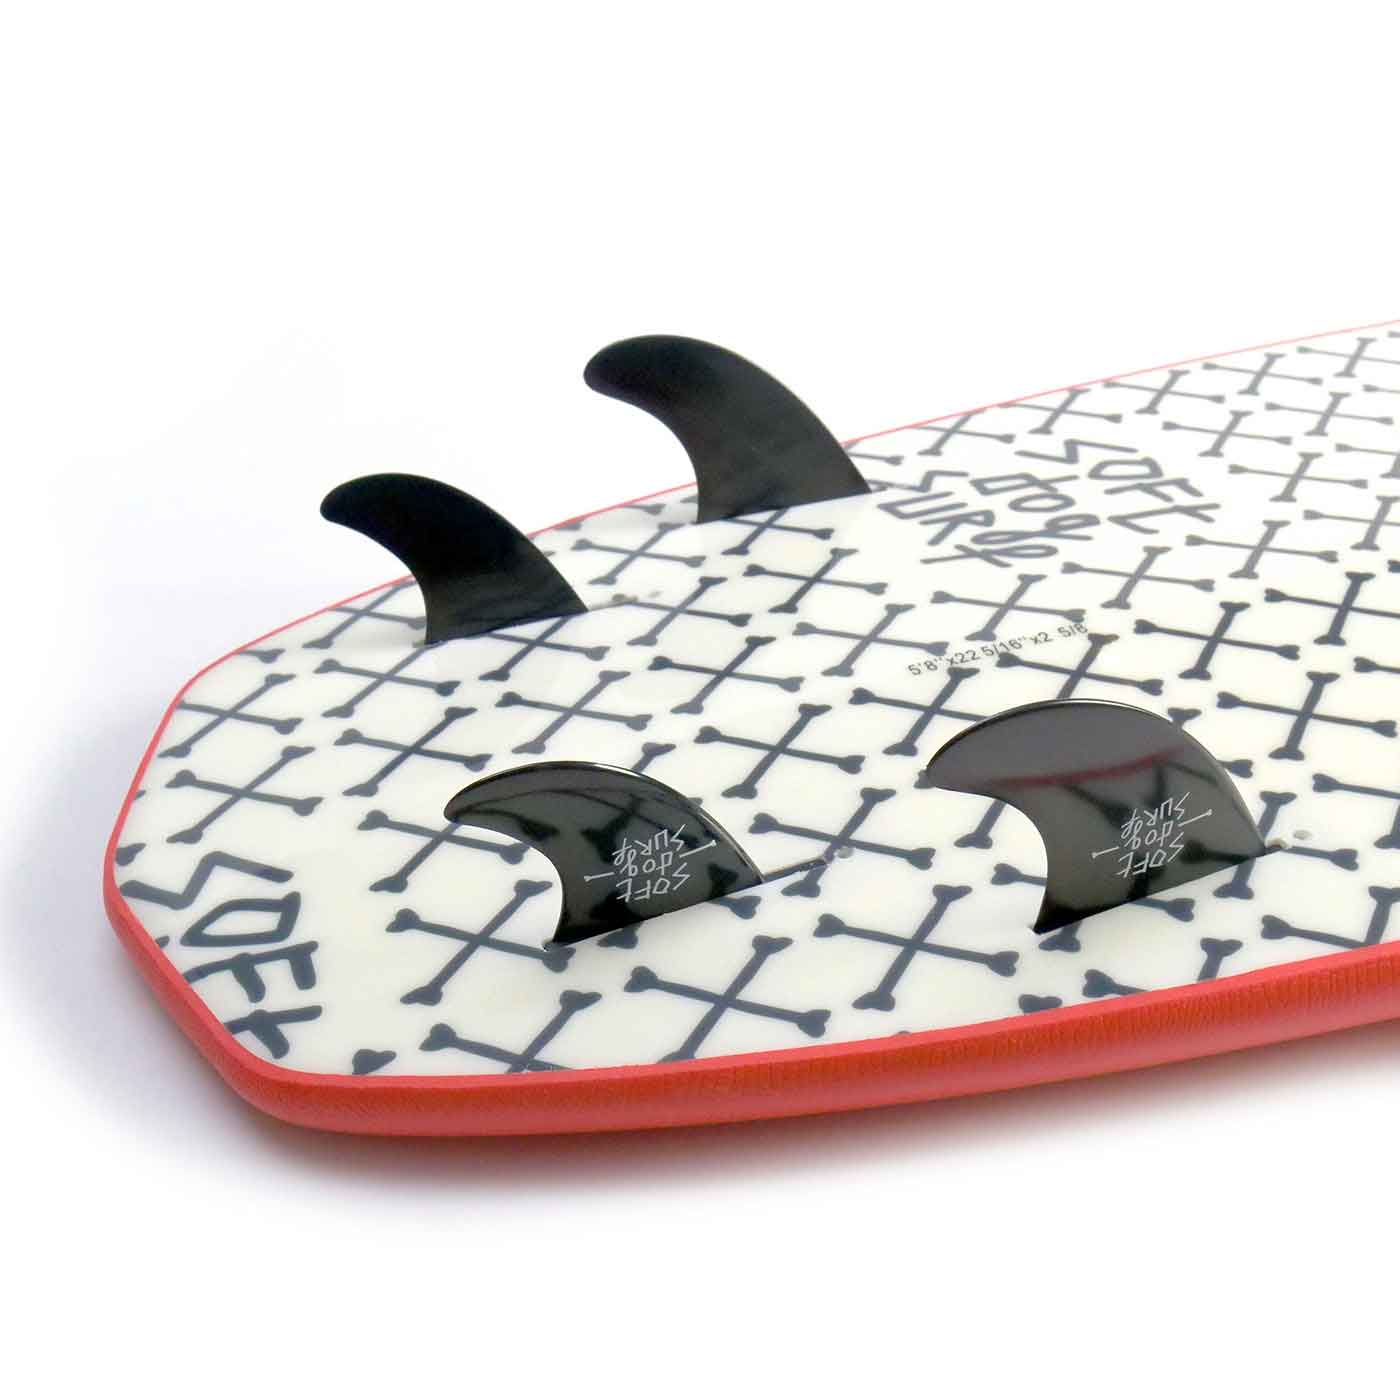 futures quad fin setup installment 5'8 greyhound soft top surfboard